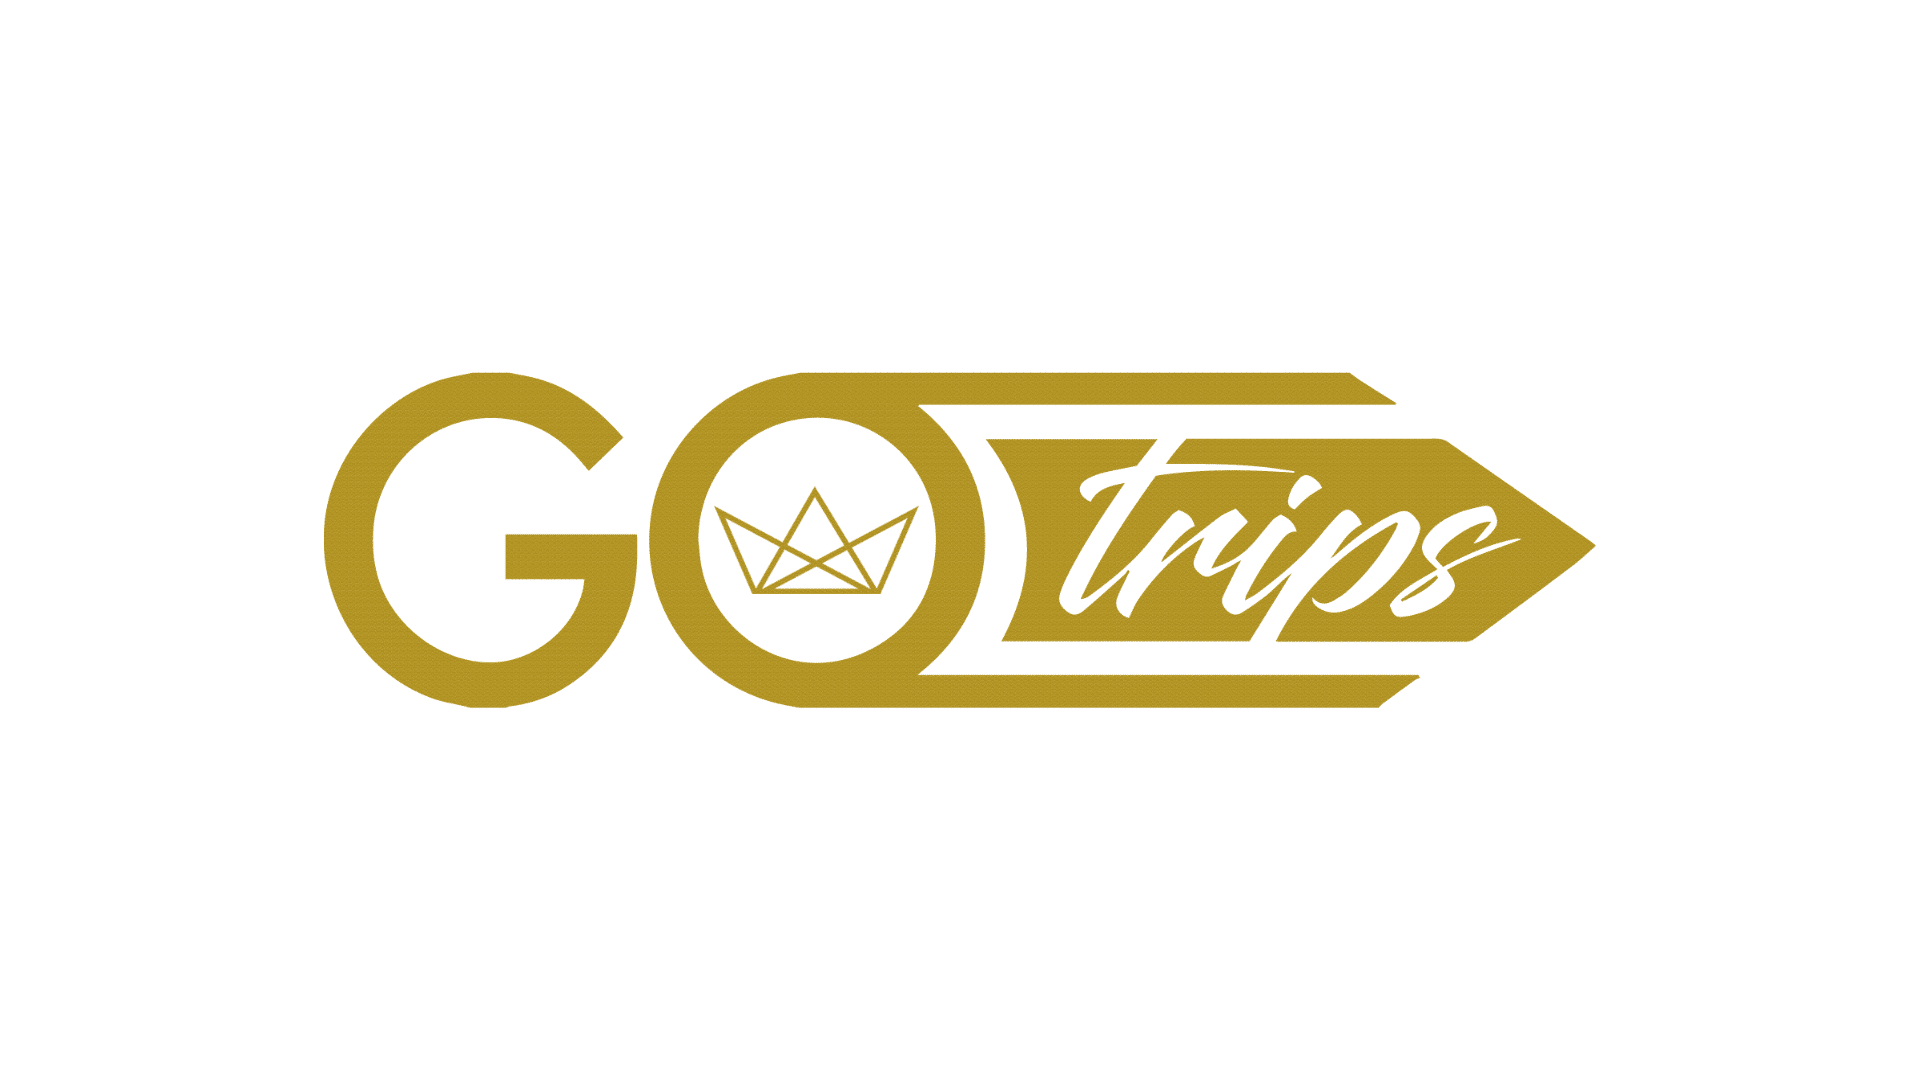 Go Trip